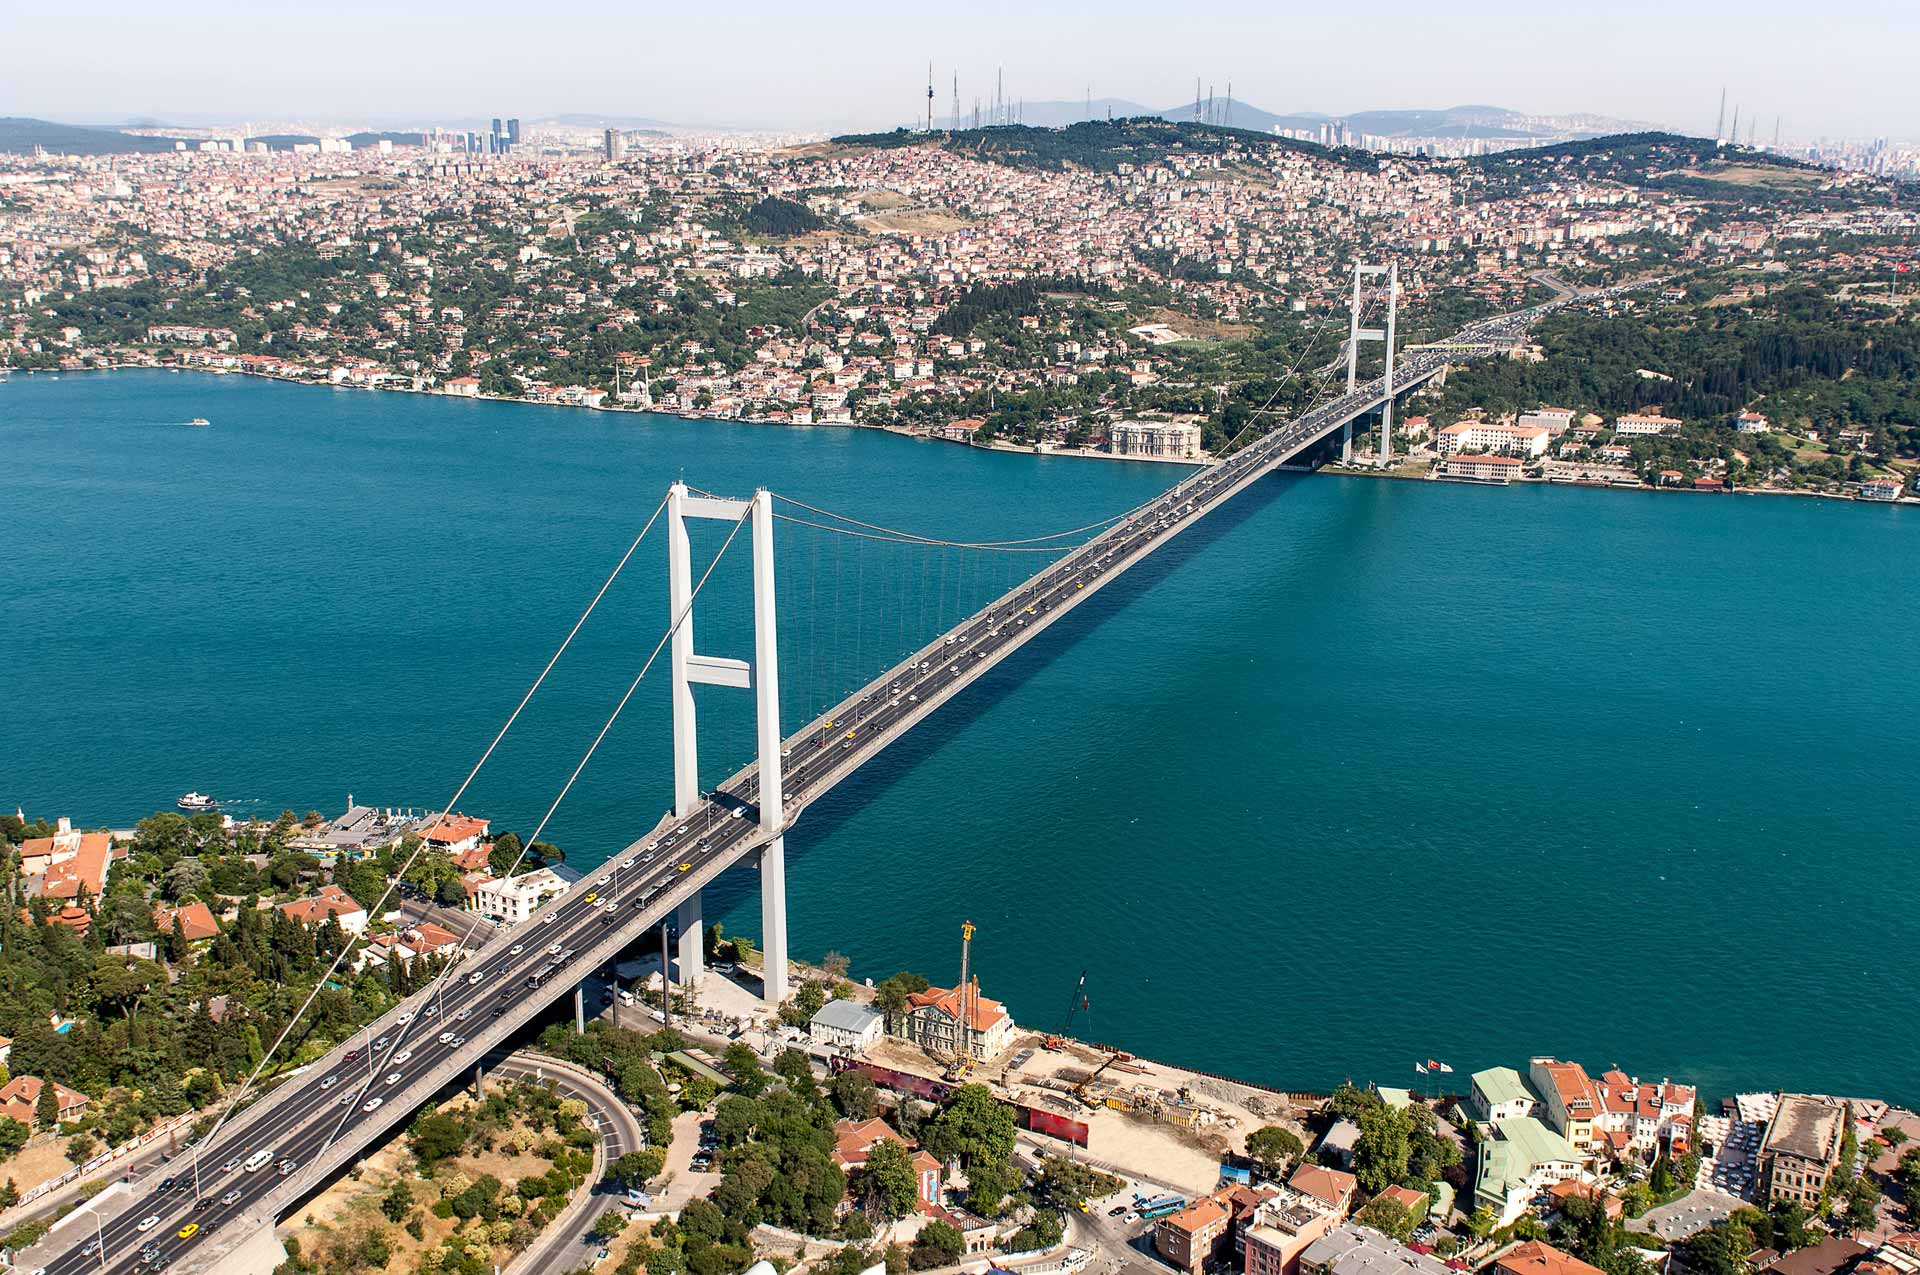 Bosphorus Bridge with background of Bosphorus strait on a sunny day with background cloudy blue sky and blue sea in Istanbul, Türkiye (Turkey).